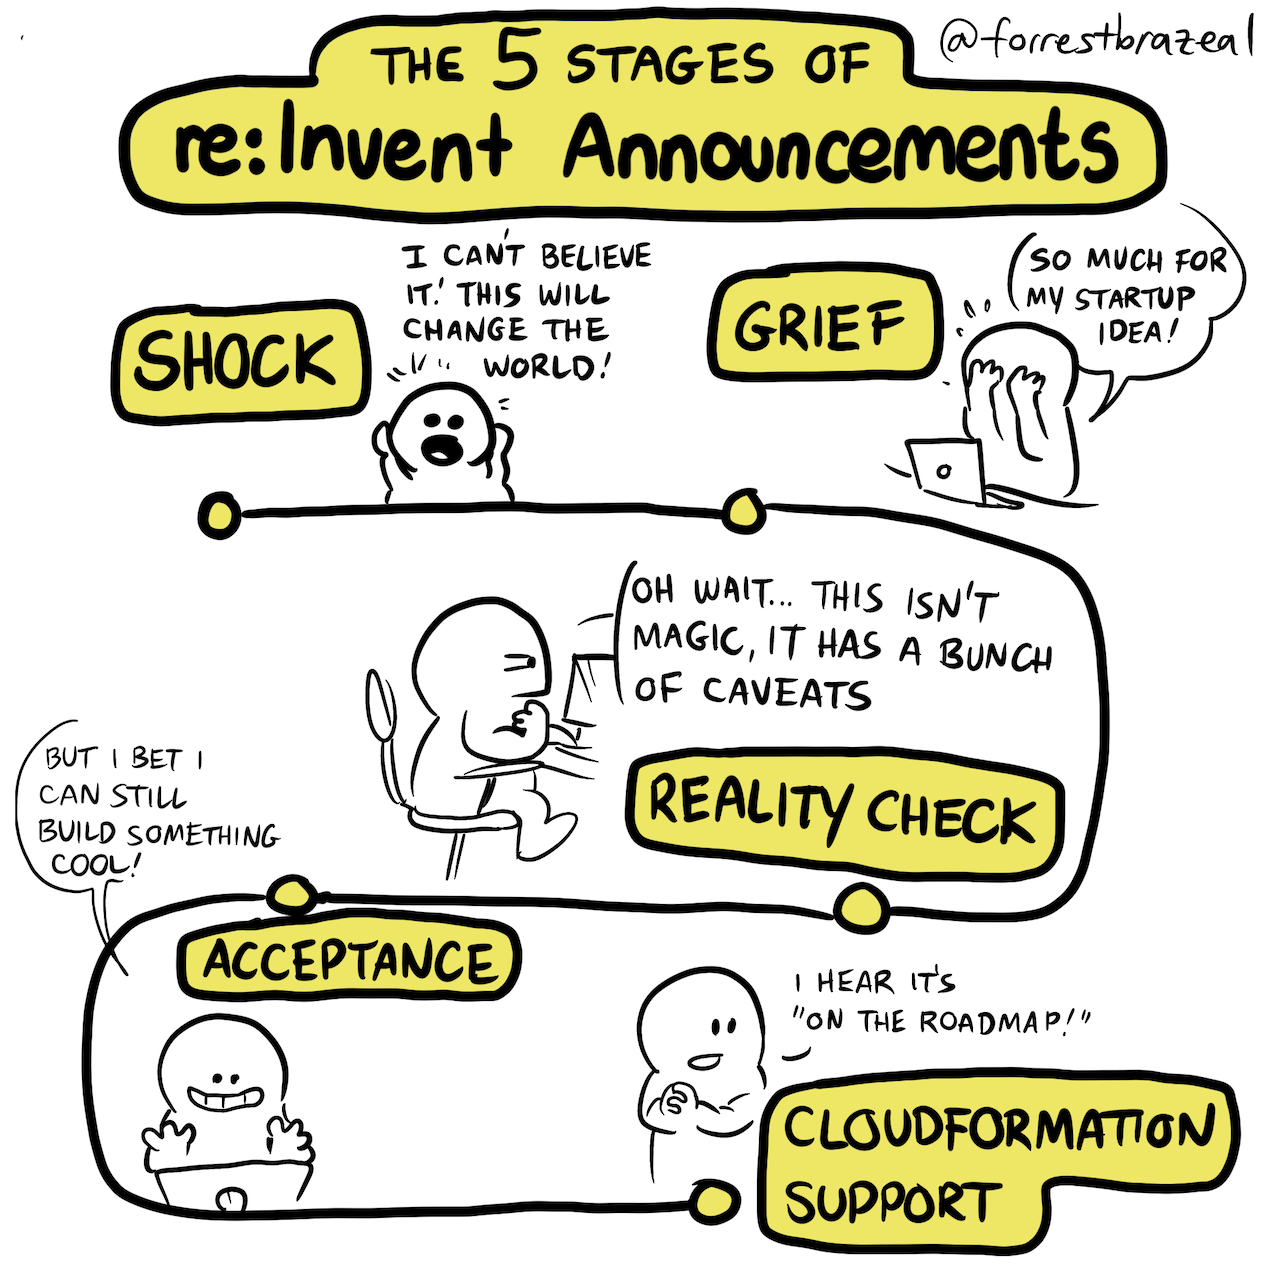 re:Invent Announcements